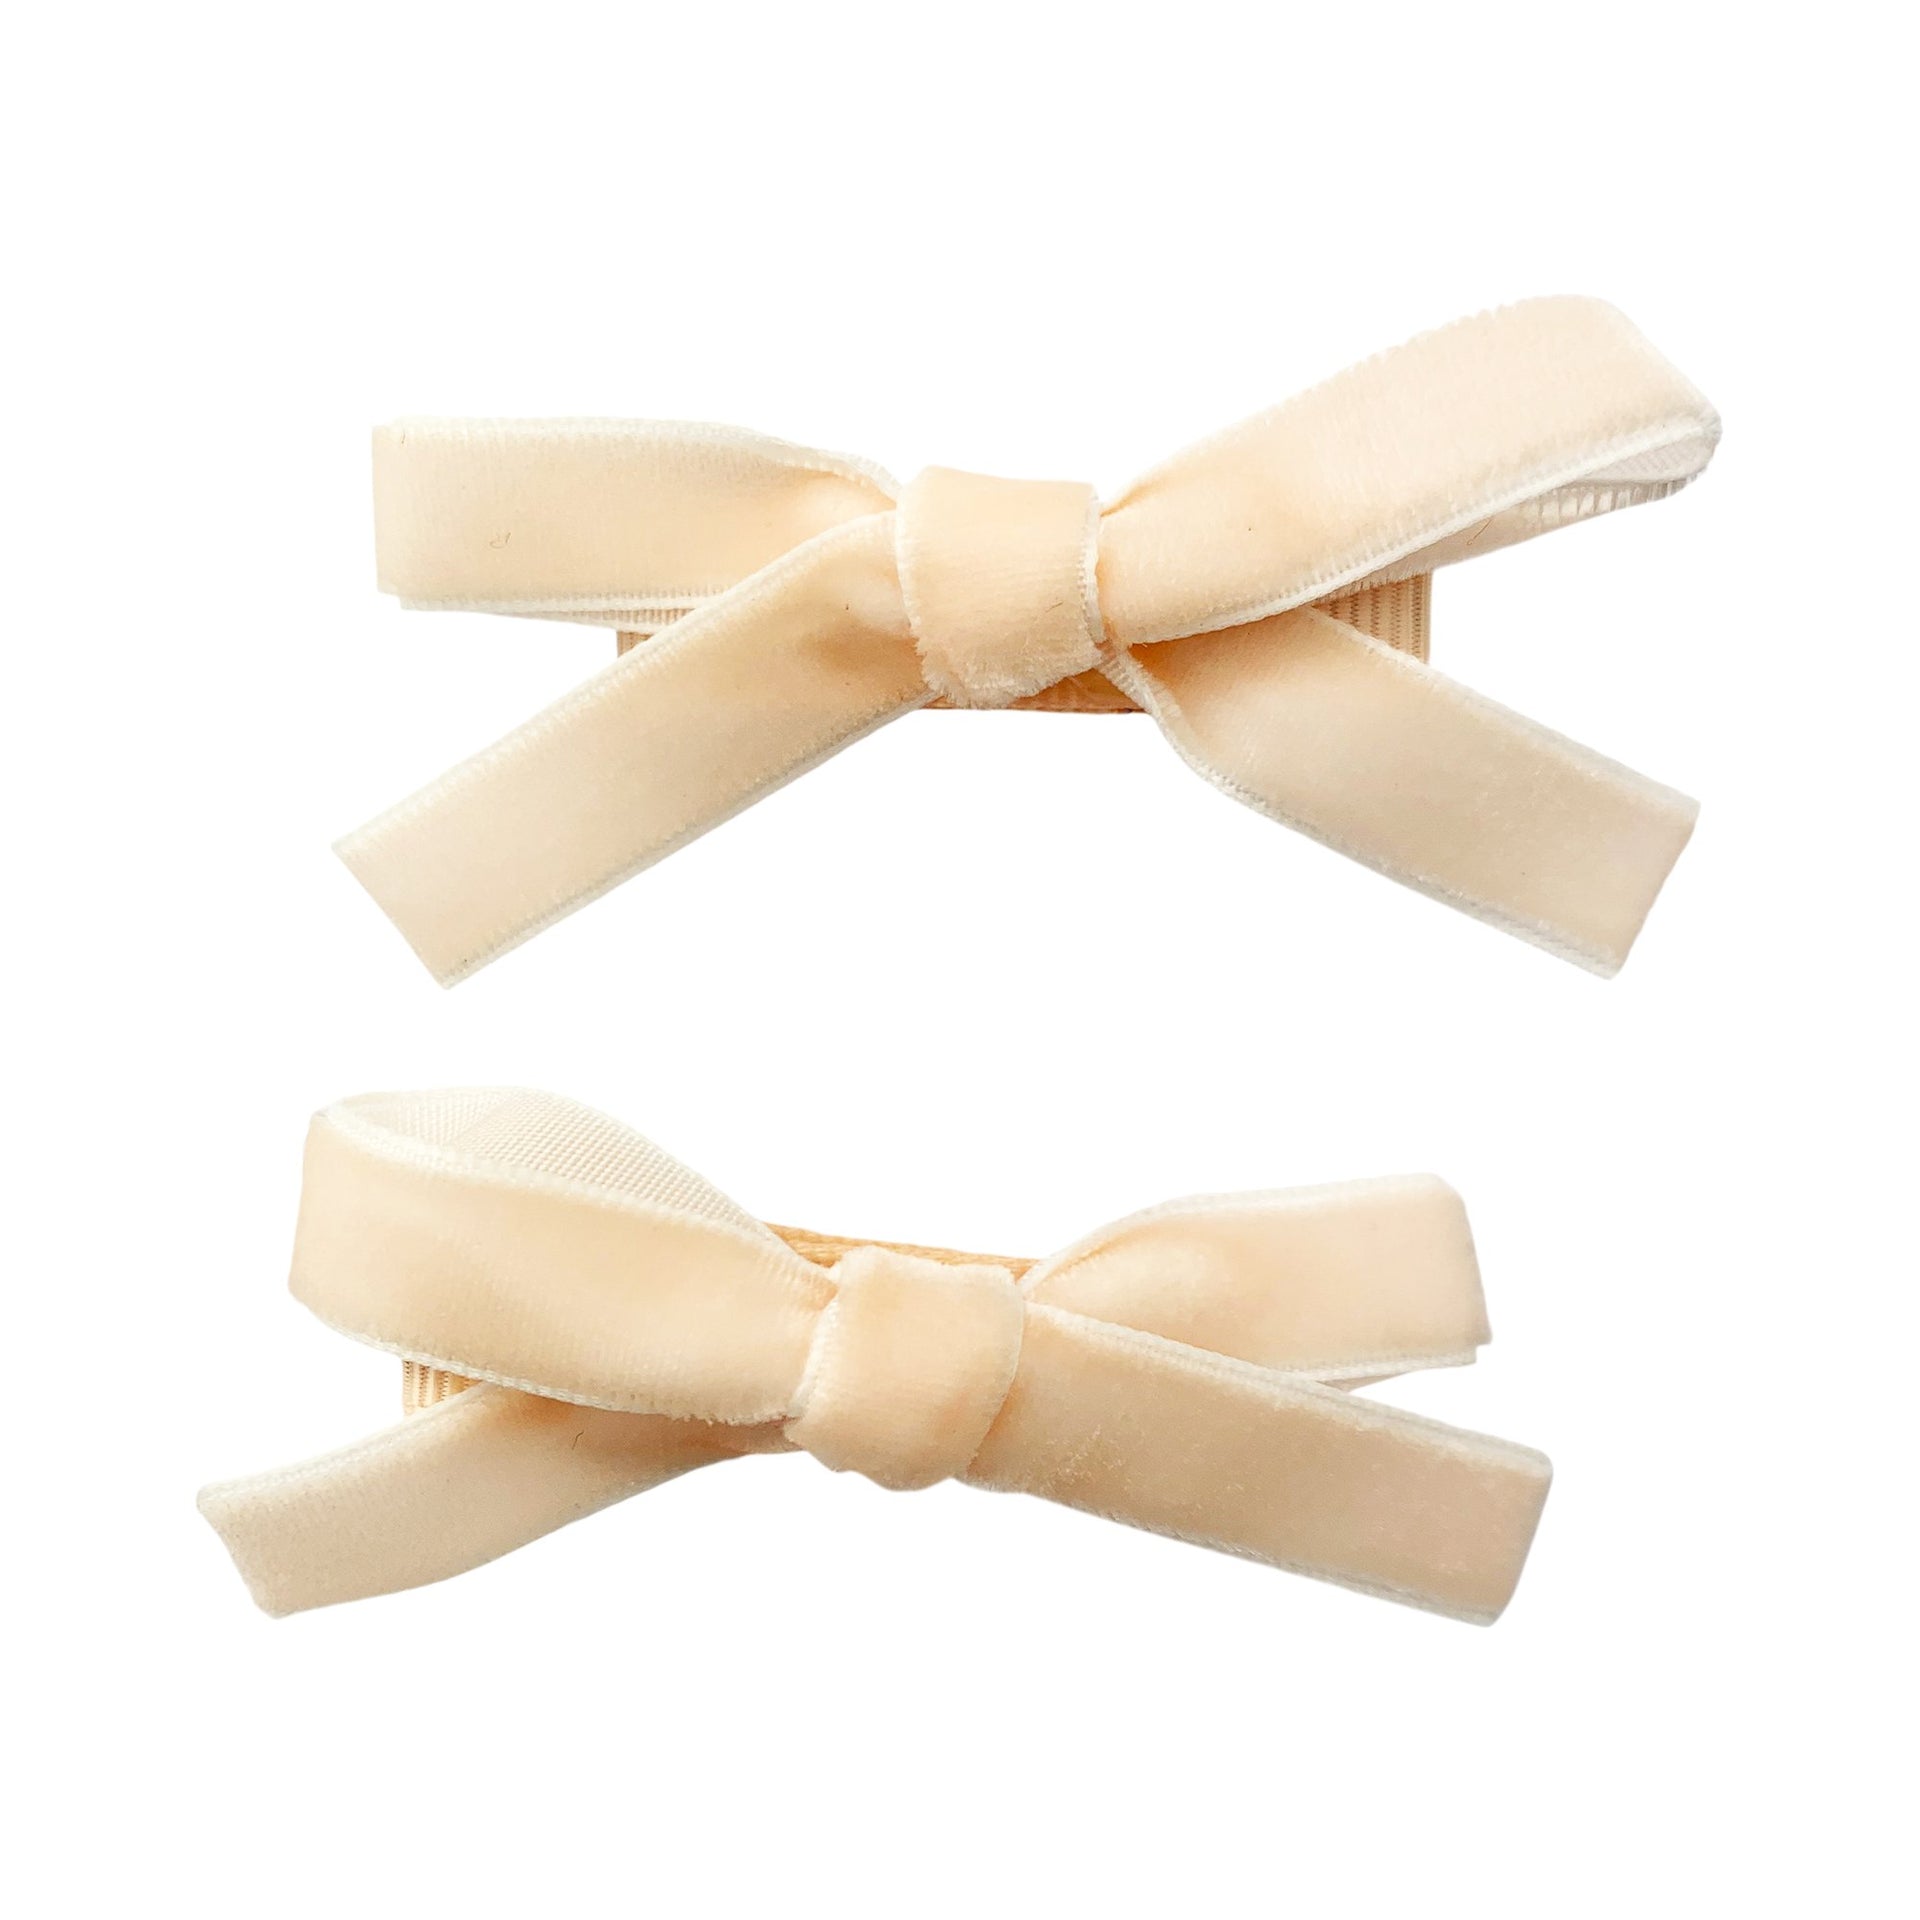 Medium Milledeux® velvet bowtie bow with tails – alligator clip – white /  gold – Milledeux